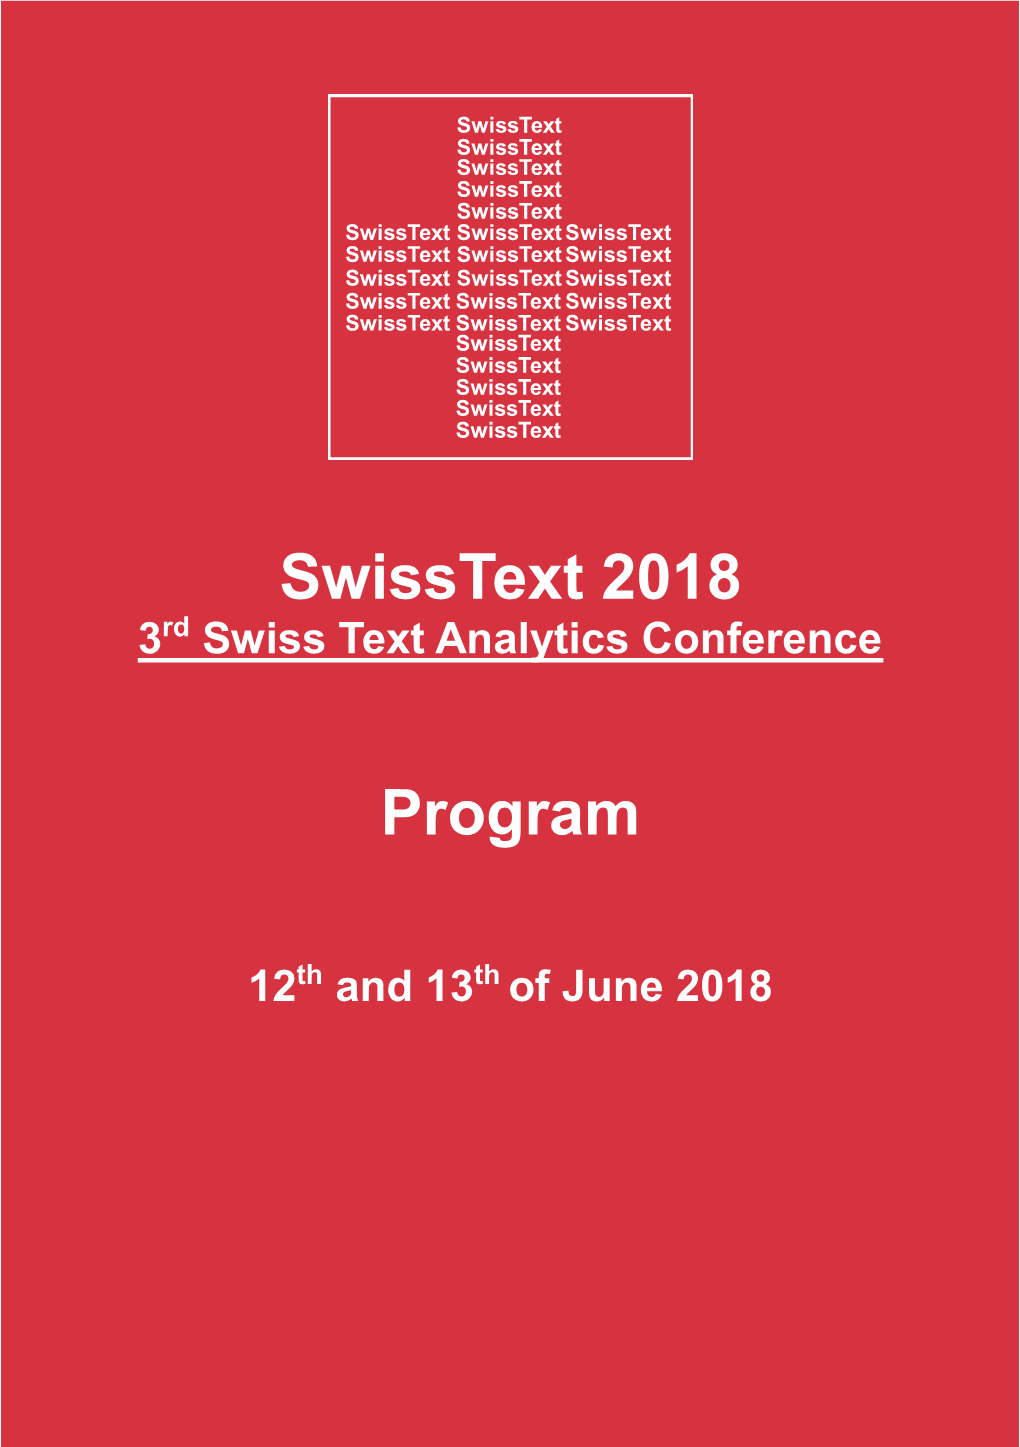 Swisstext 2018 Program